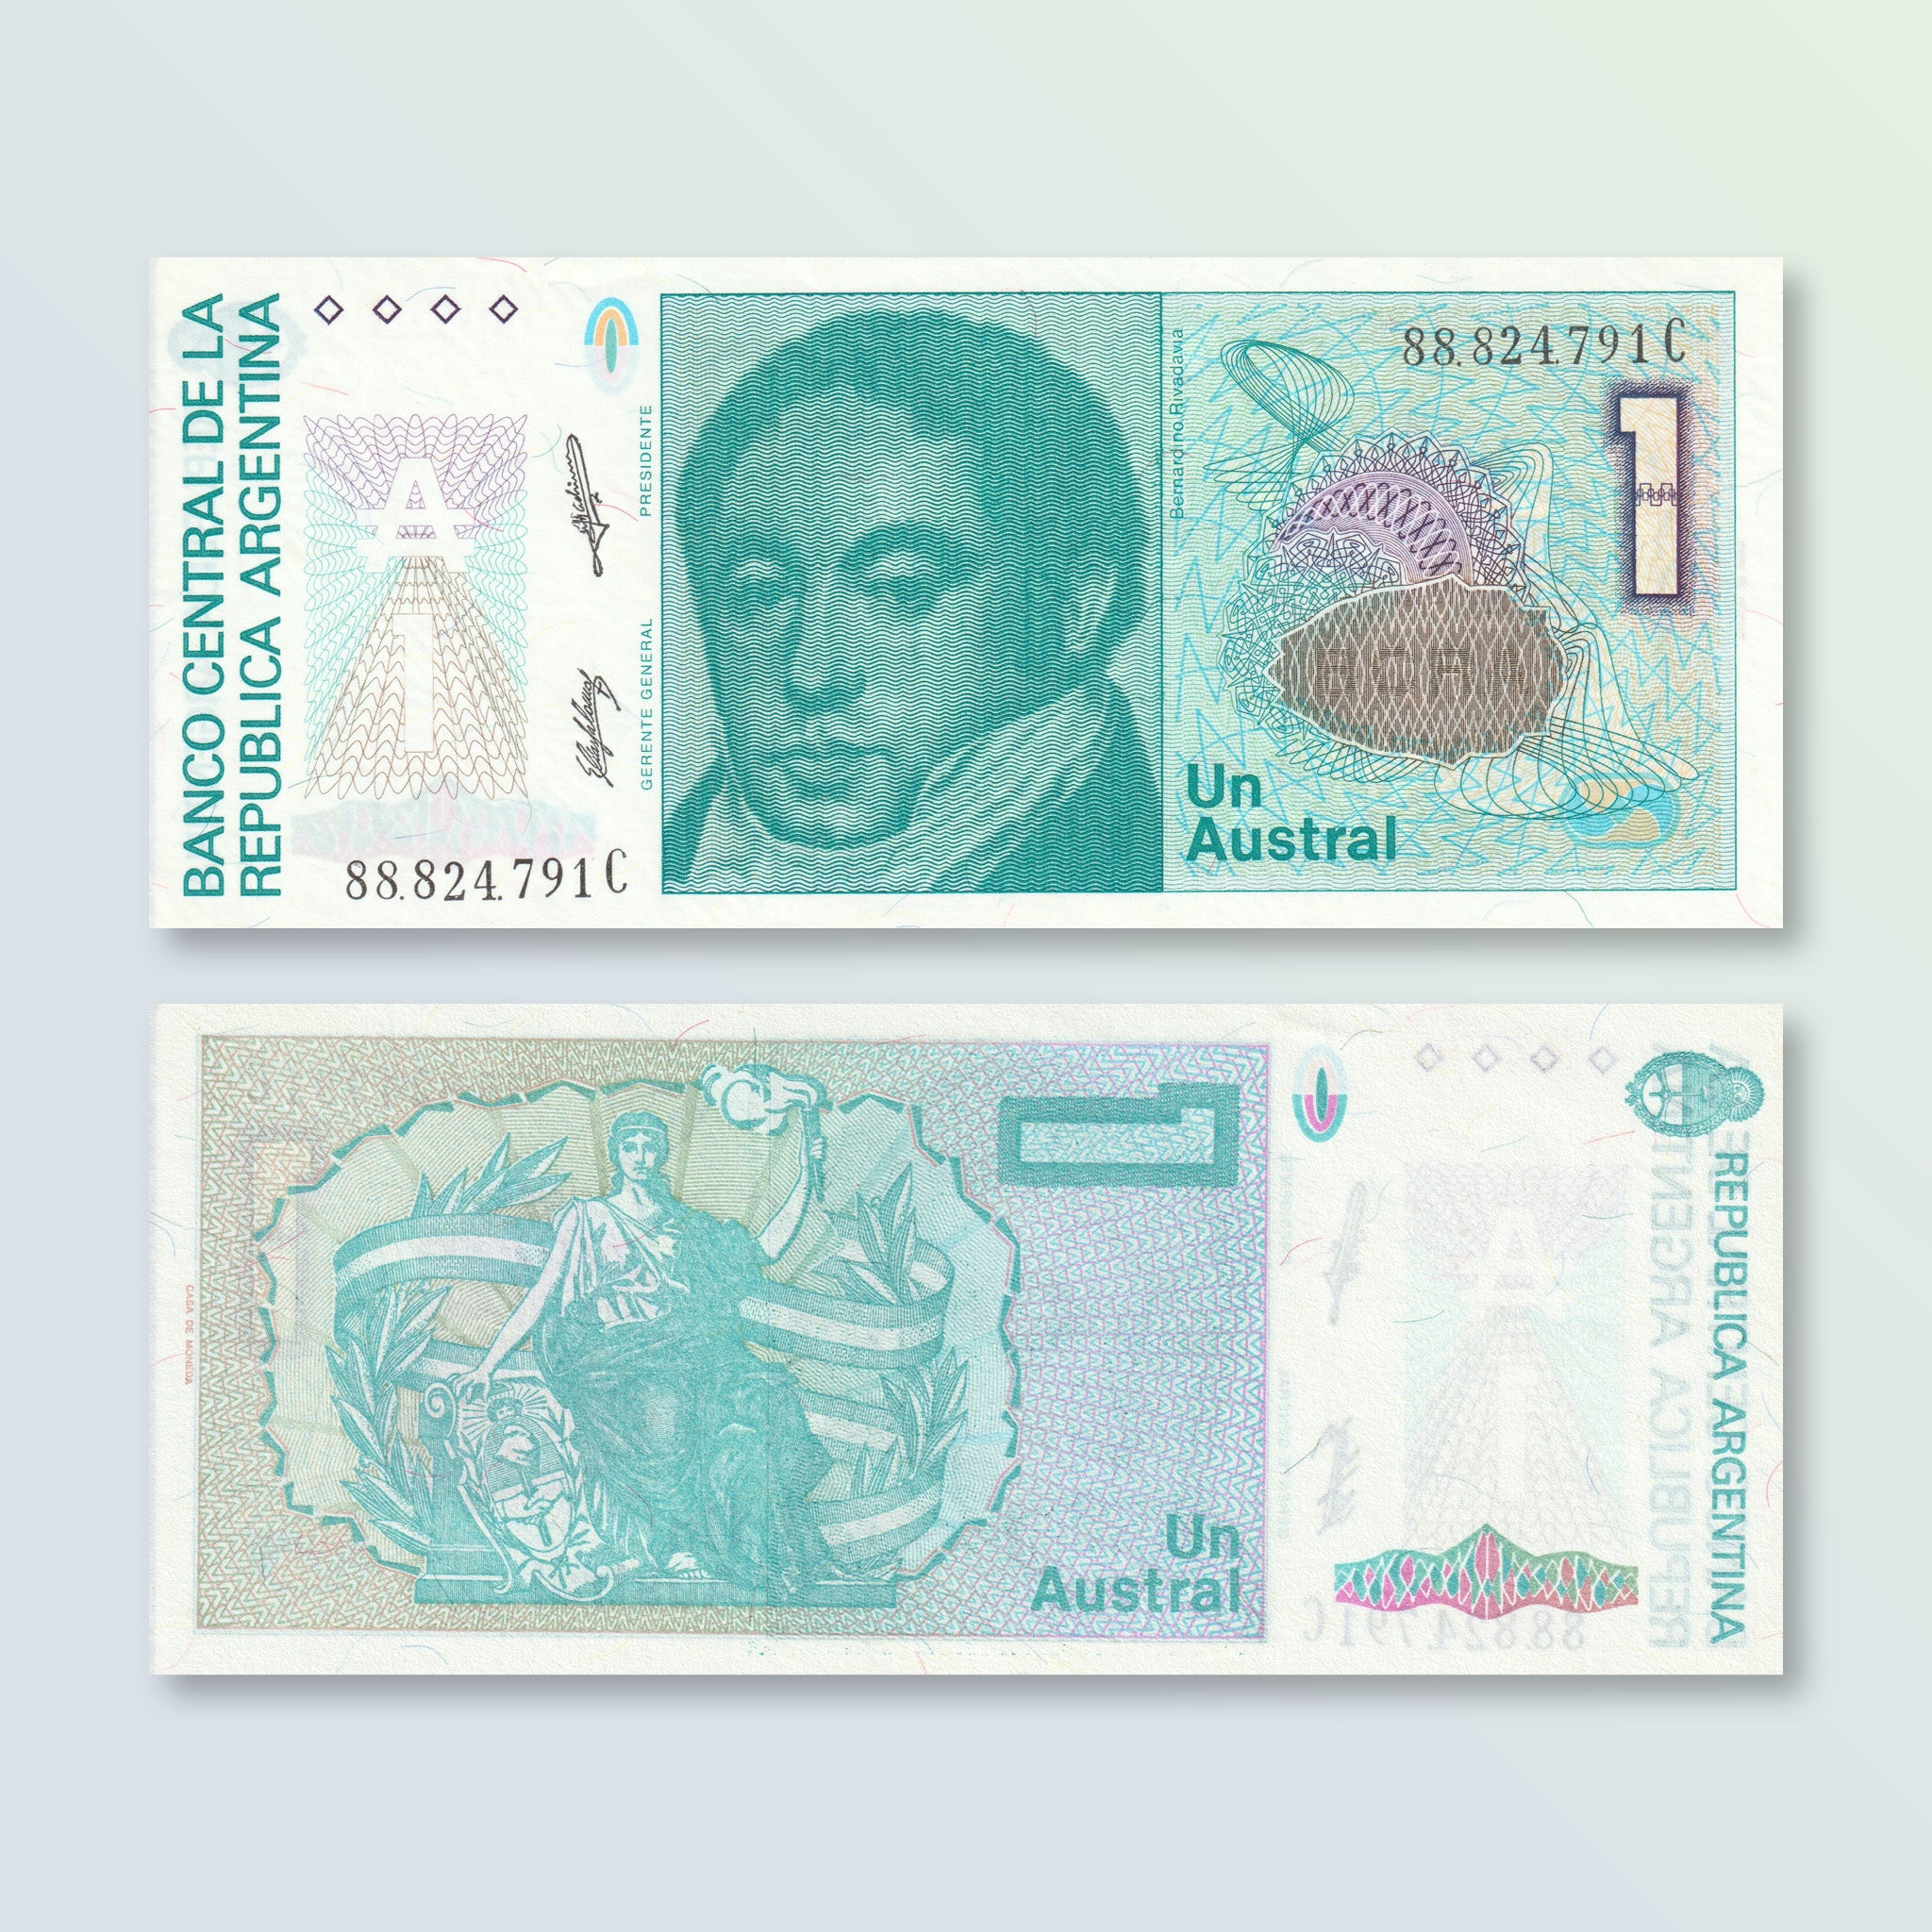 Argentina 1 Austral, 1985, B376c, P323b, UNC - Robert's World Money - World Banknotes